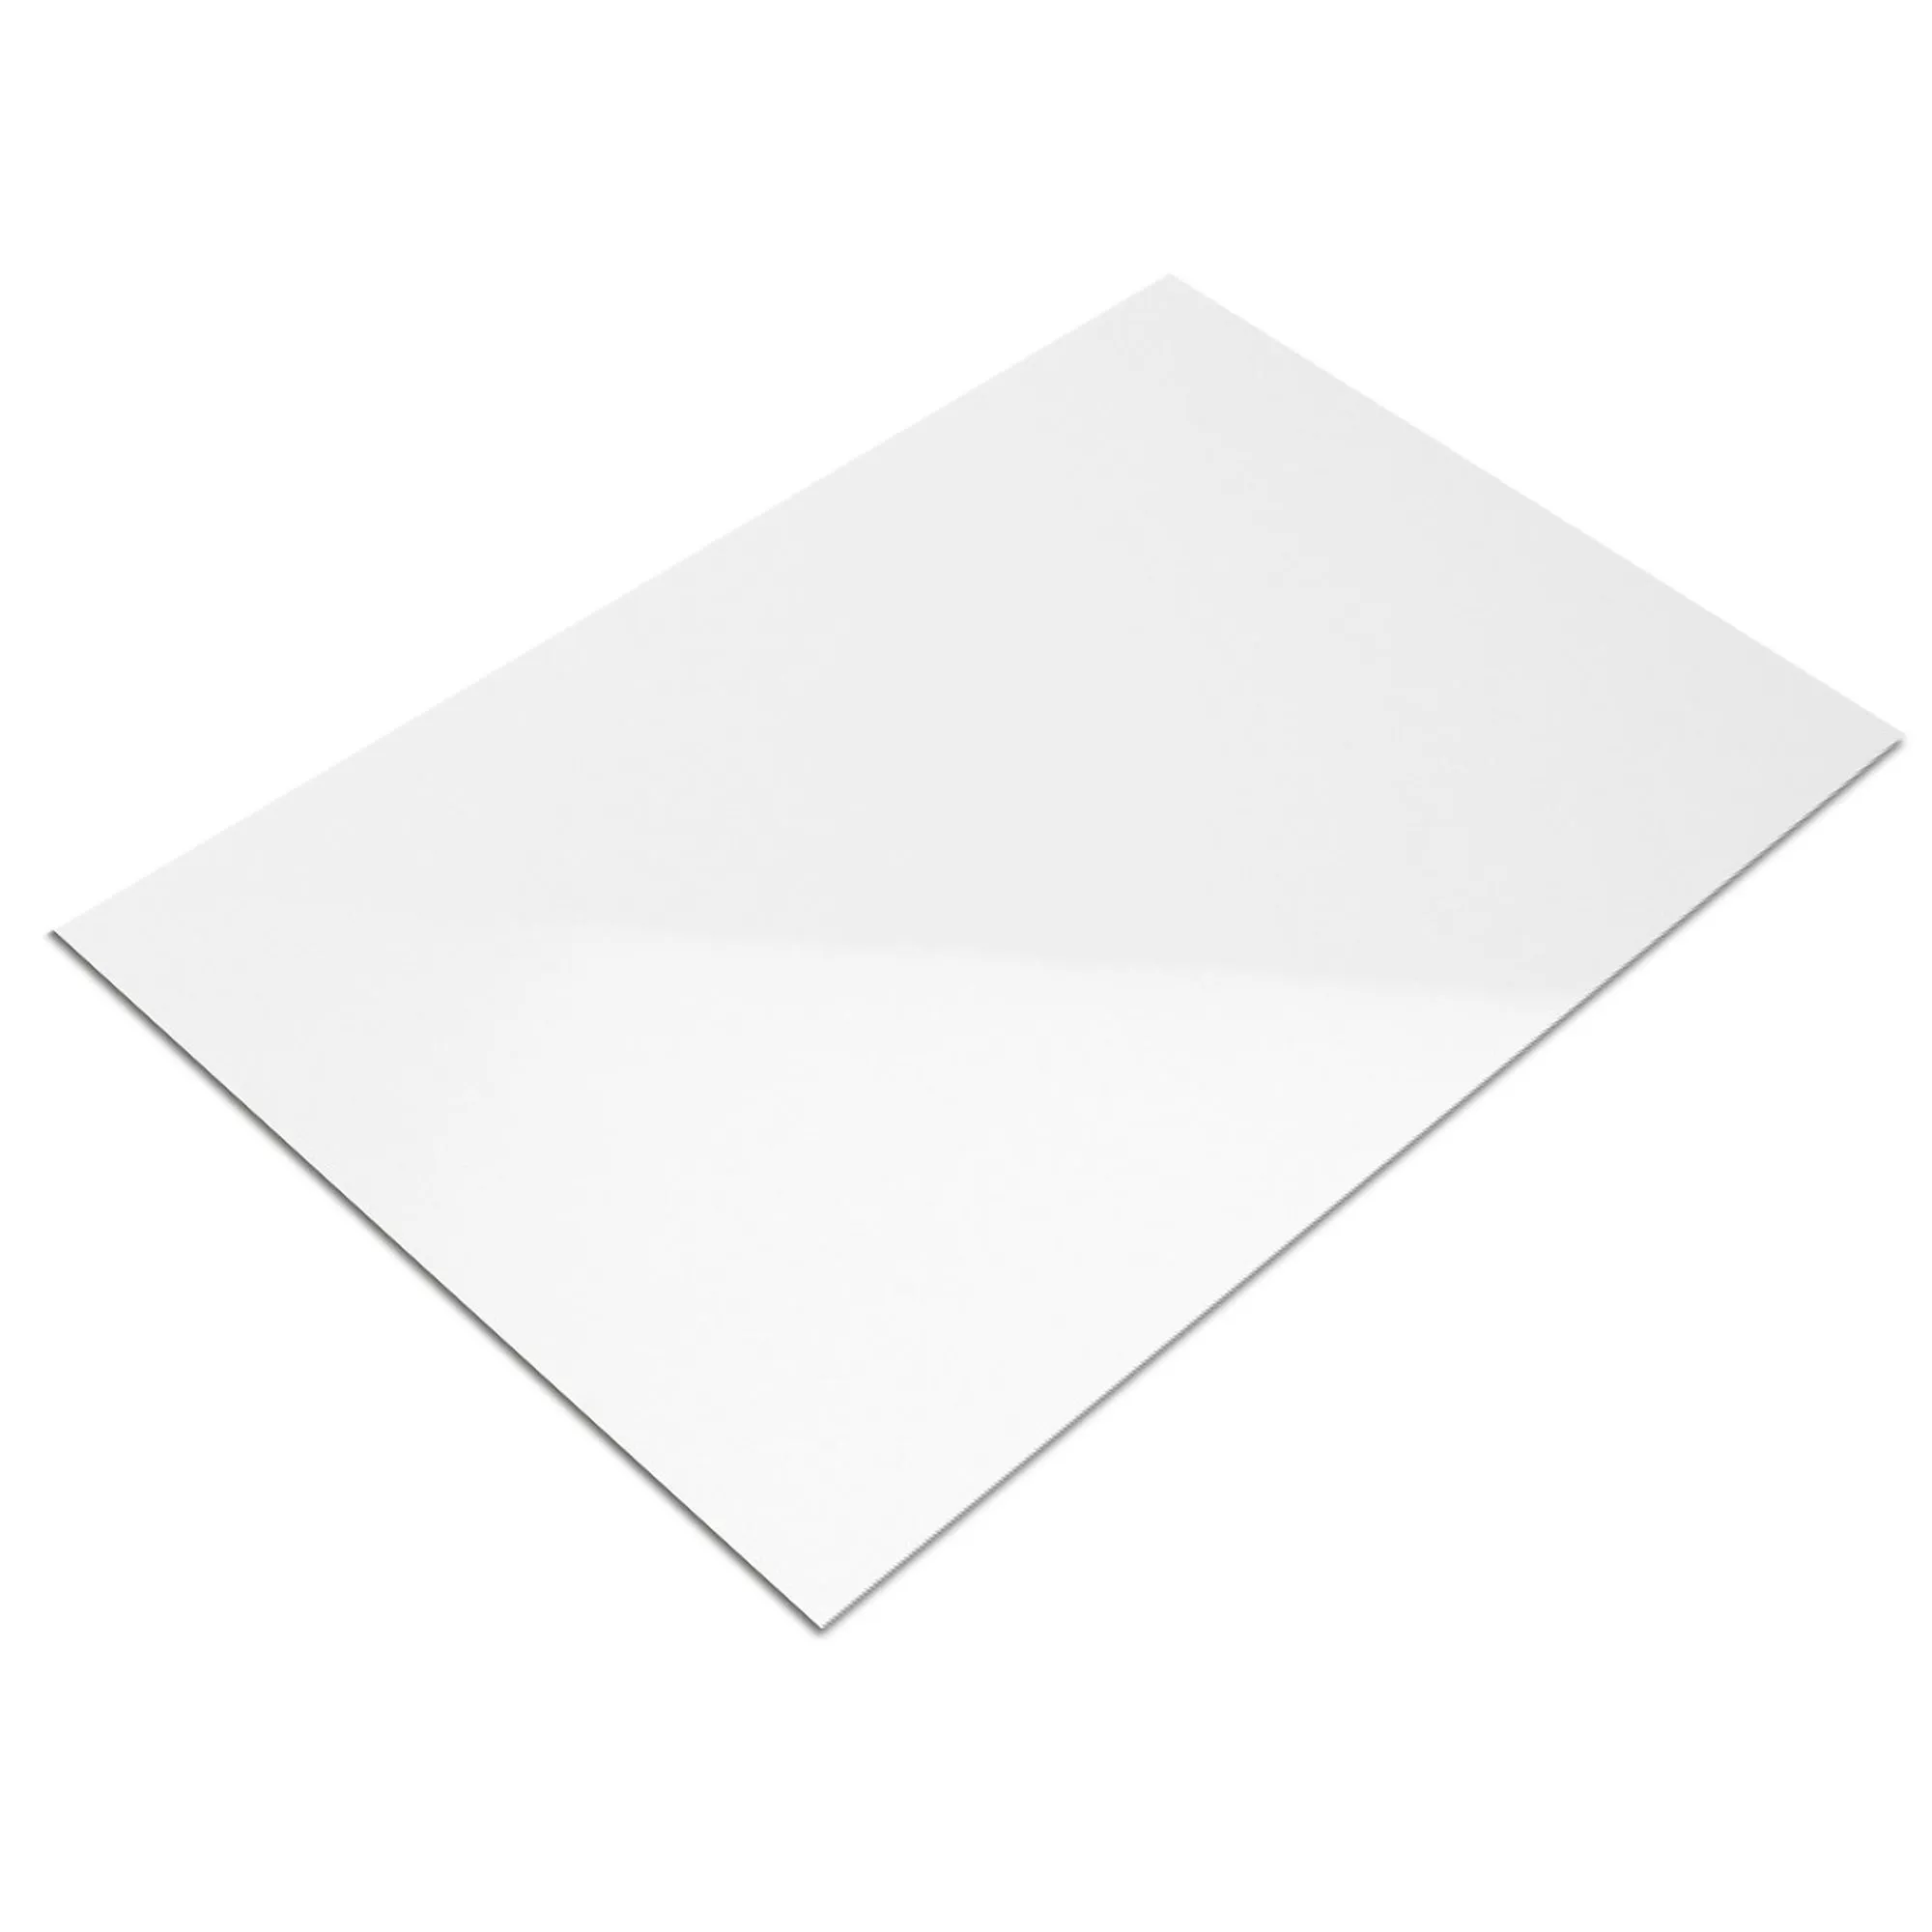 Sample Wall Tiles Fenway White Glossy 10x30cm